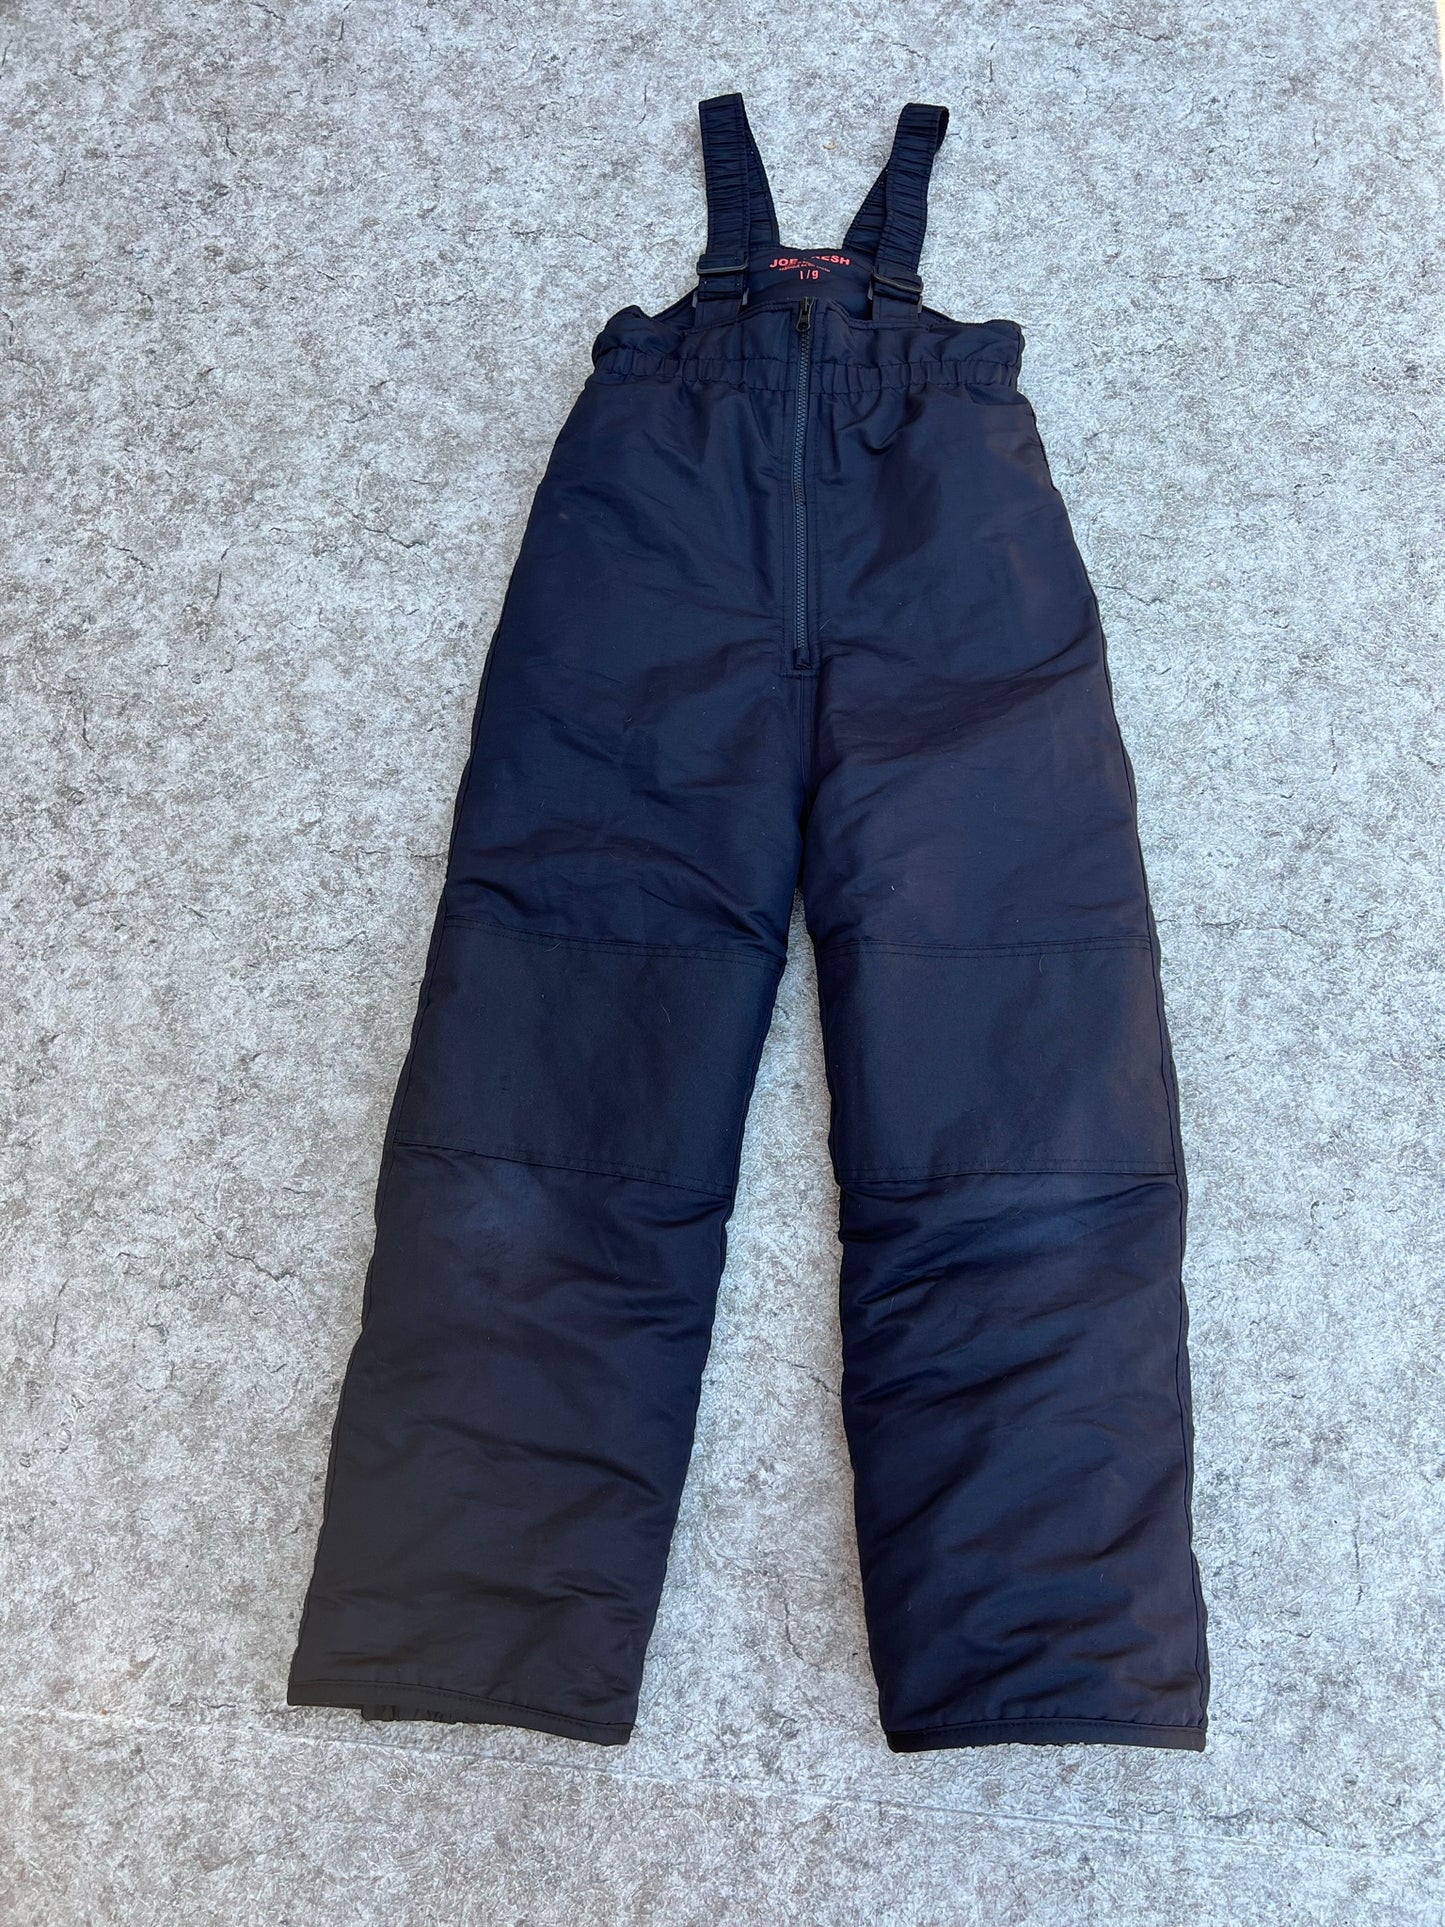 Snow Pants Child Size 10-12 Joe Black Fleeced Lined With Bib TH 2314 Minor Wear